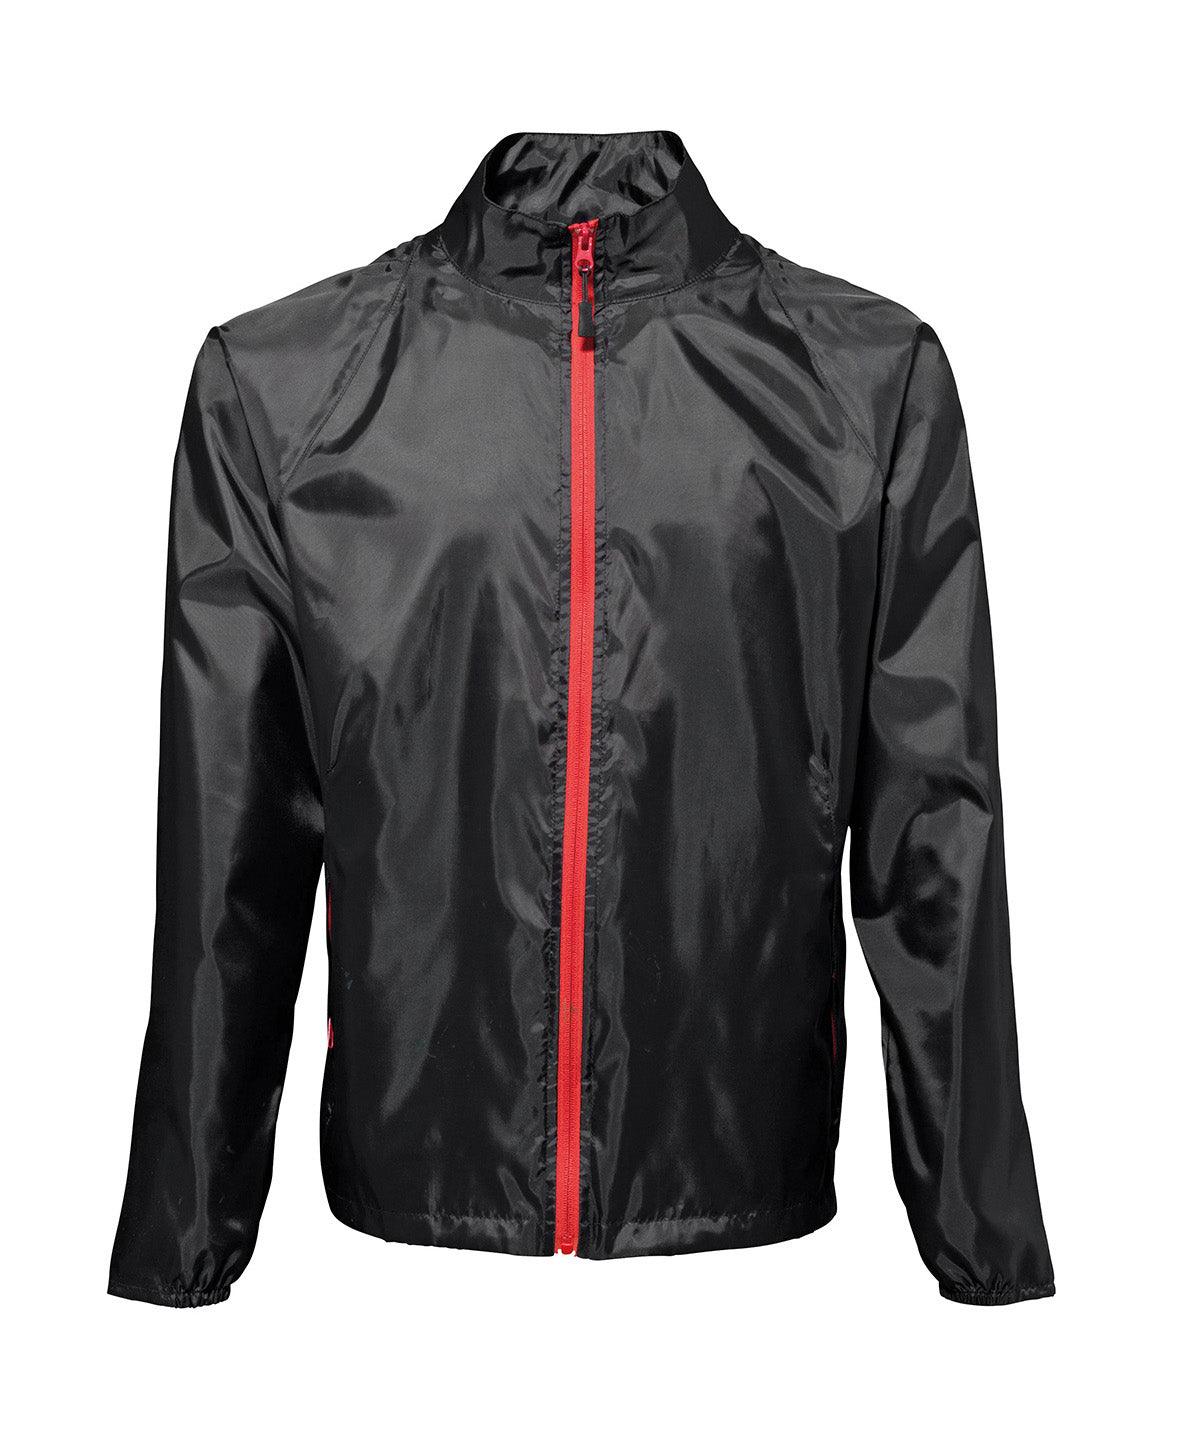 Orange/Black - Contrast lightweight jacket Jackets 2786 Alfresco Dining, Camo, Jackets & Coats, Lightweight layers, Rebrandable, S/S 19 Trend Colours Schoolwear Centres